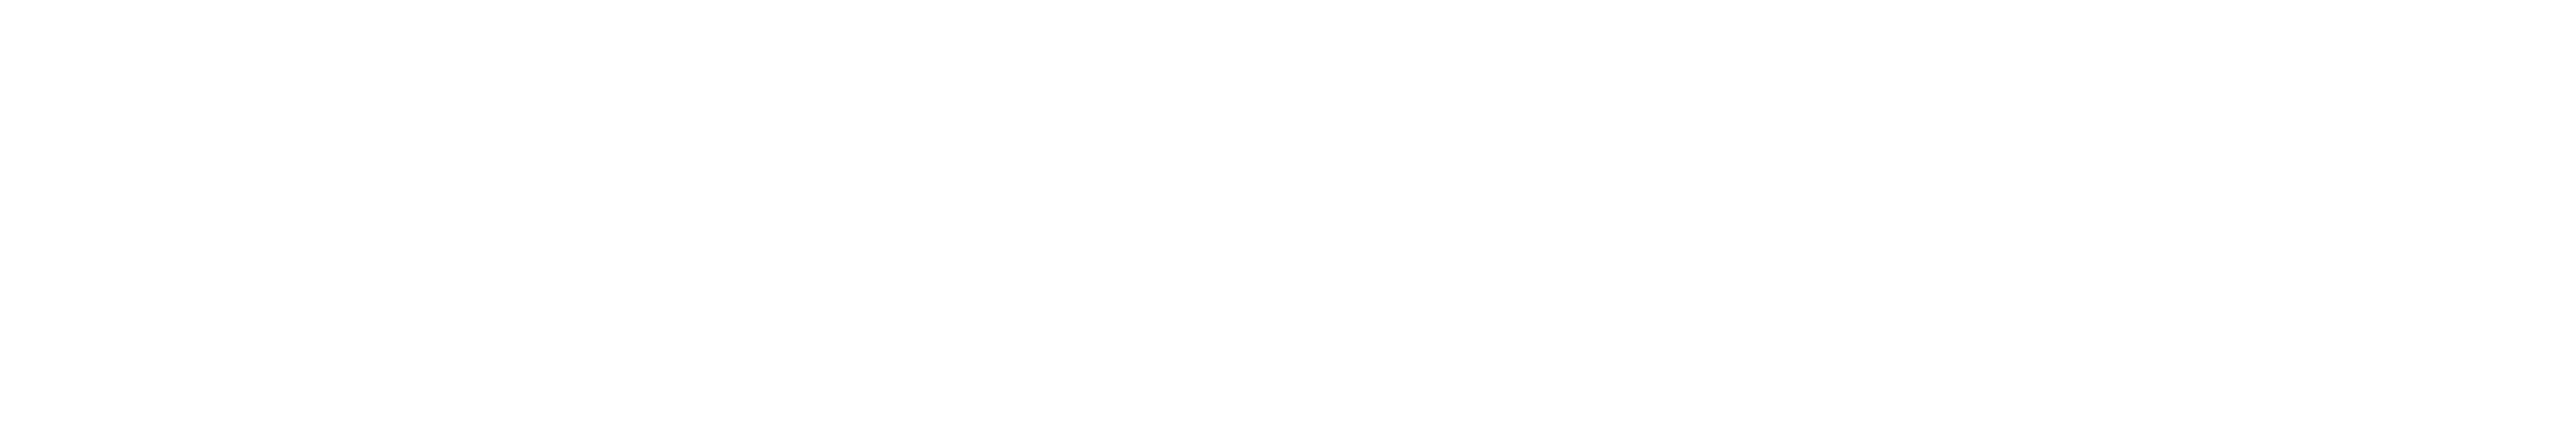 SPLICE Software Logo 2018 White-1